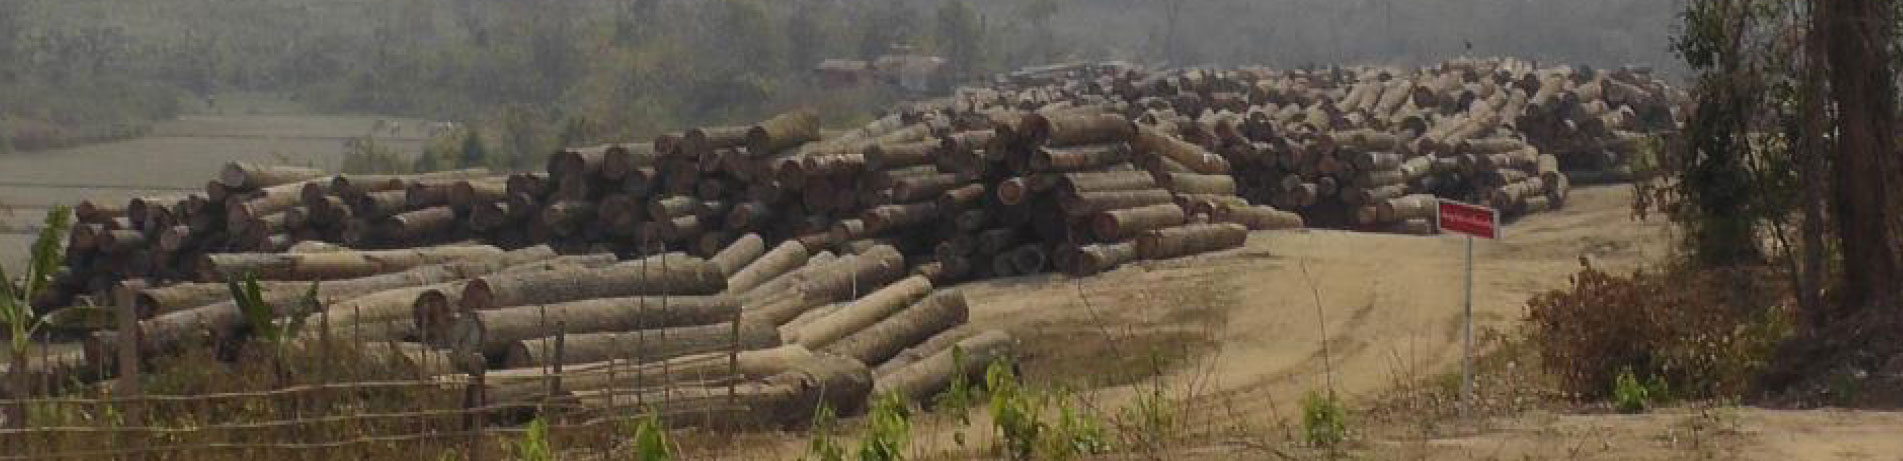 Log depot, Myanmar